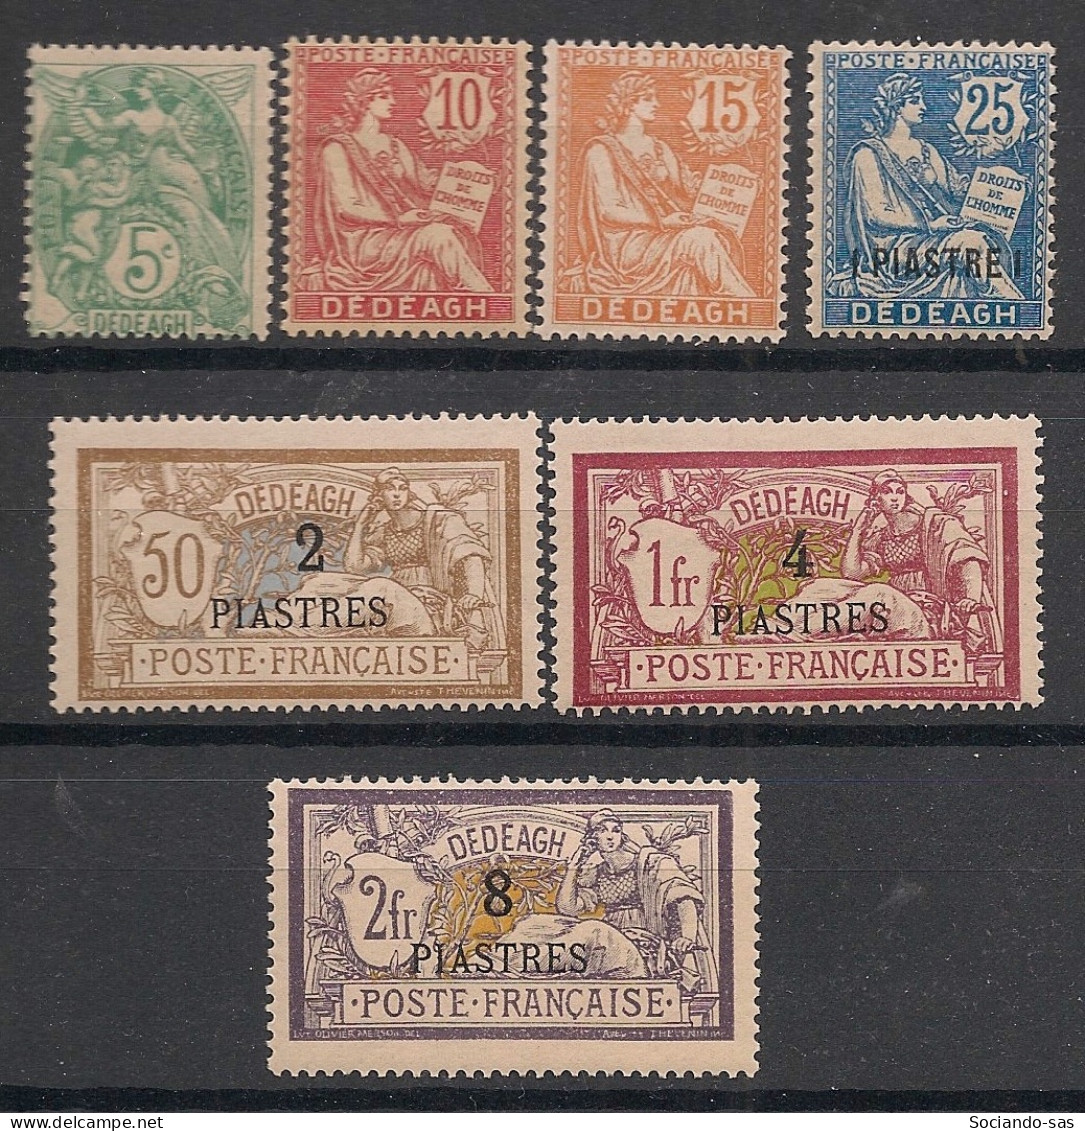 DEDEAGH - 1902-11 - N°YT. 10 à 16 - Série Complète - Neuf * / MH VF - Unused Stamps